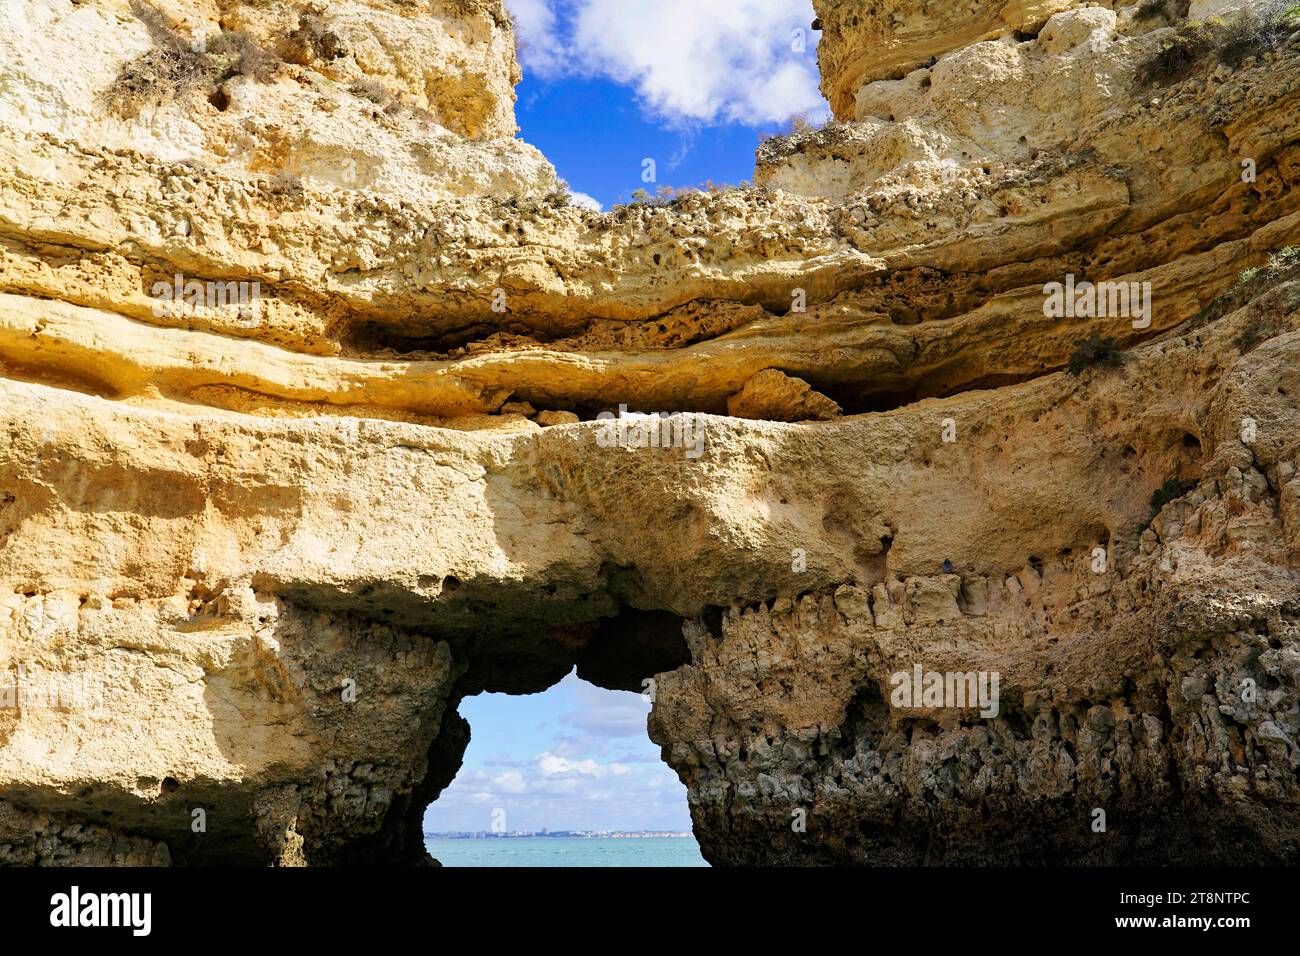 Boat tour, cave tour along the cliffs, rocky coast on the Atlantic, Lagos, Algarve, Portugal Stock Photo